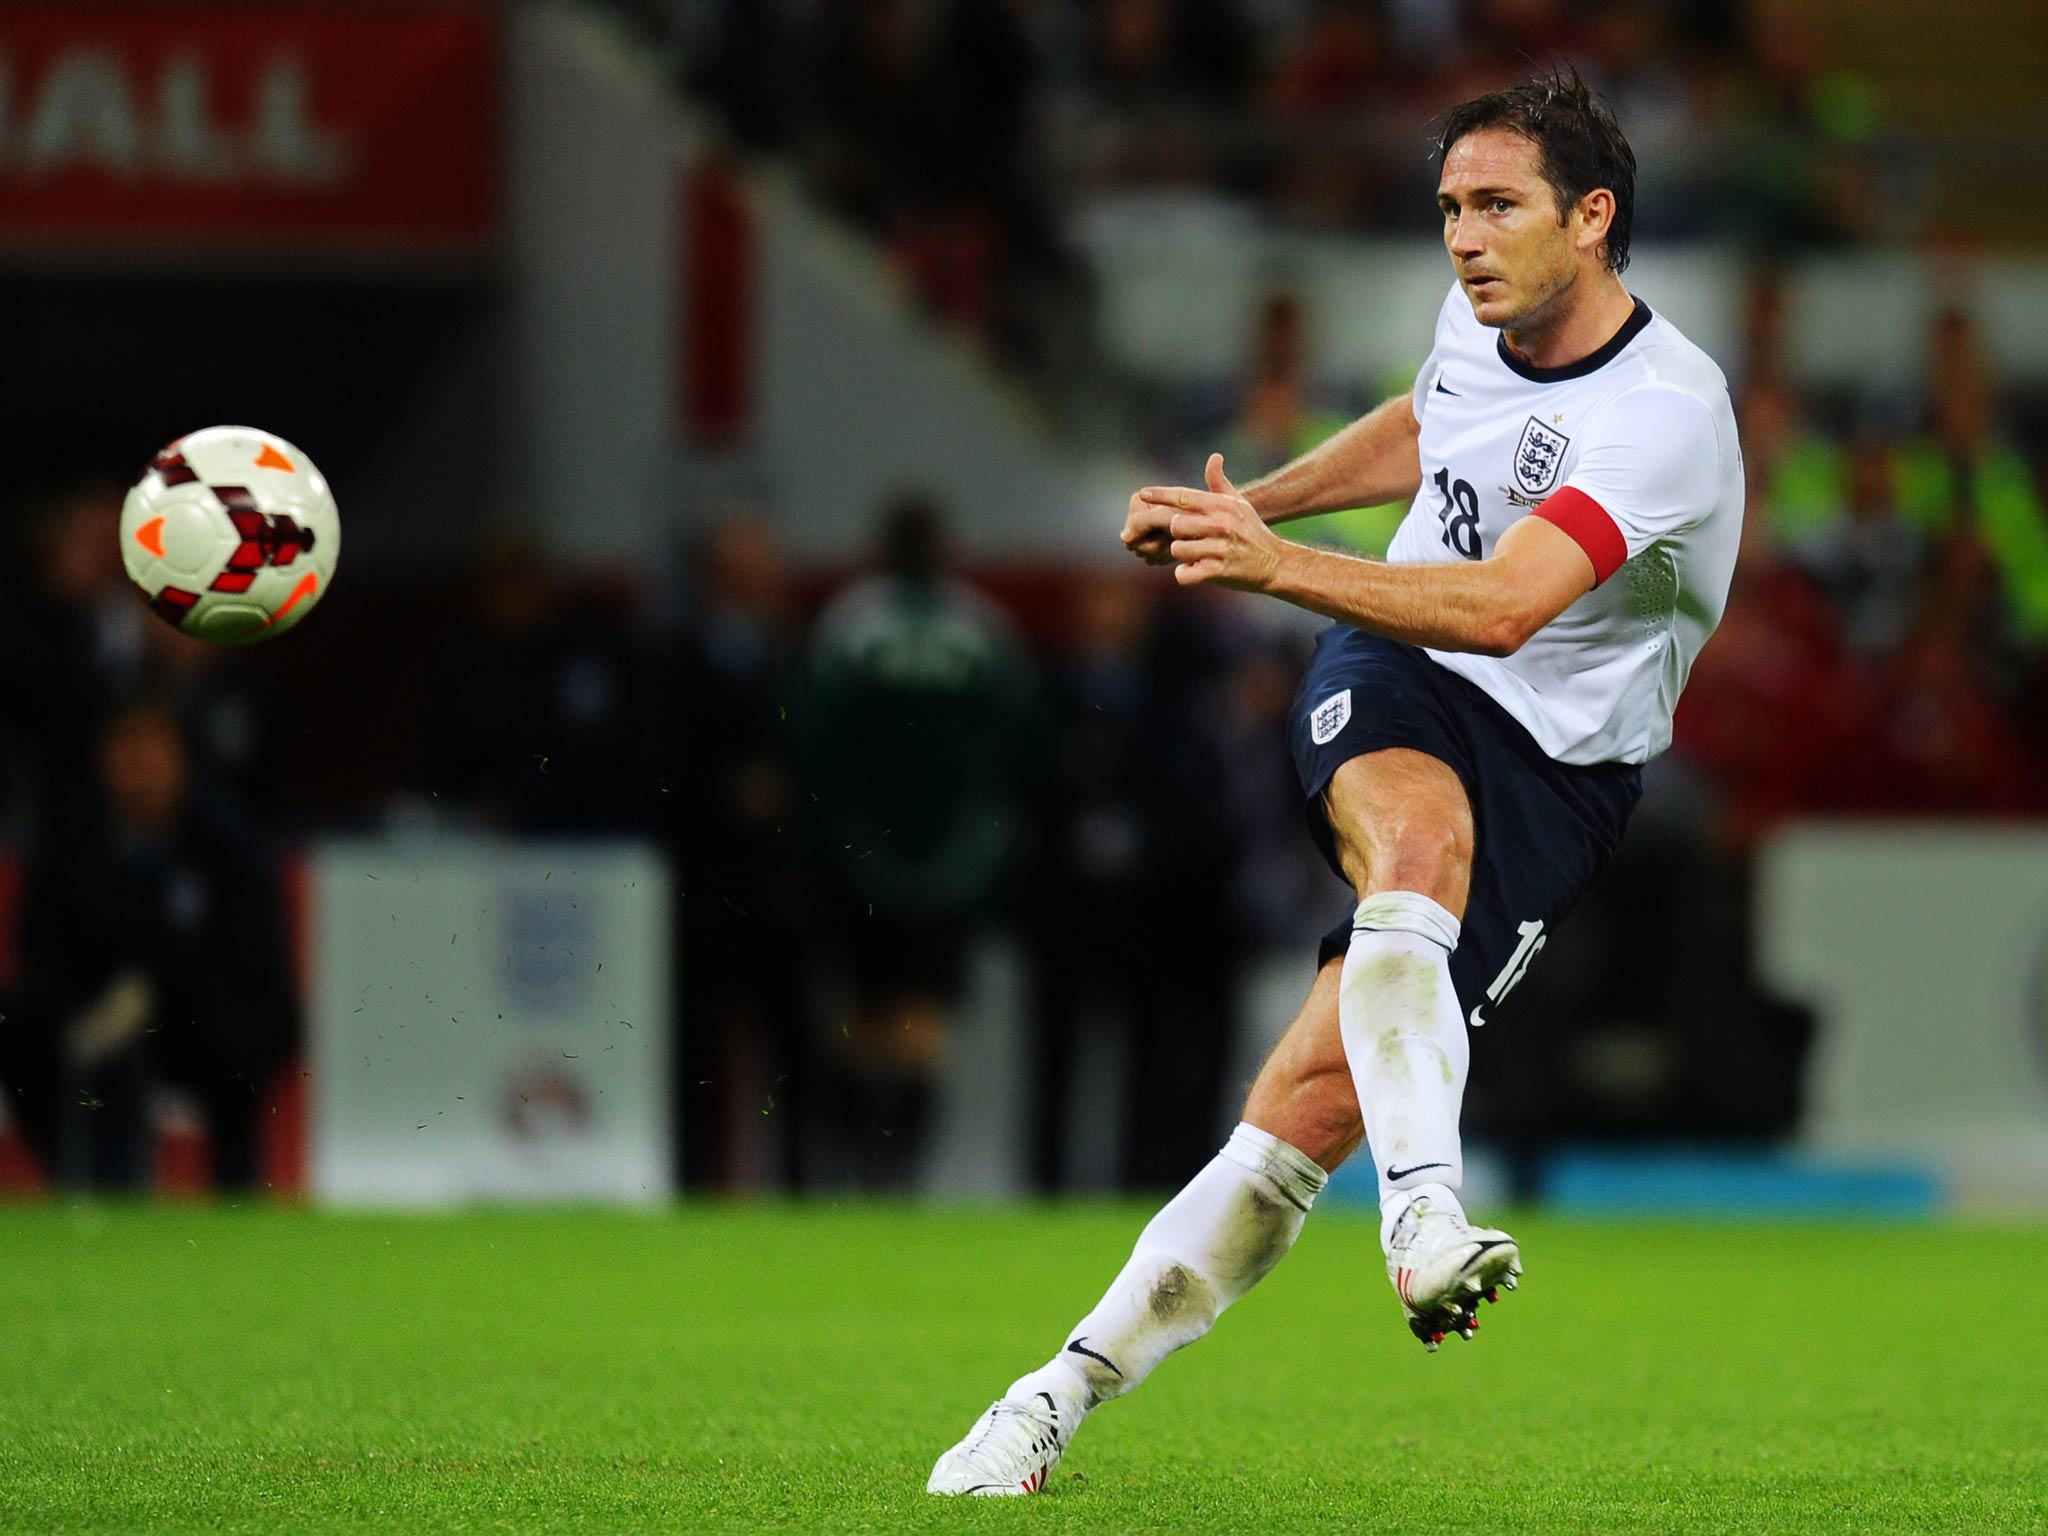 England midfielder Frank Lampard